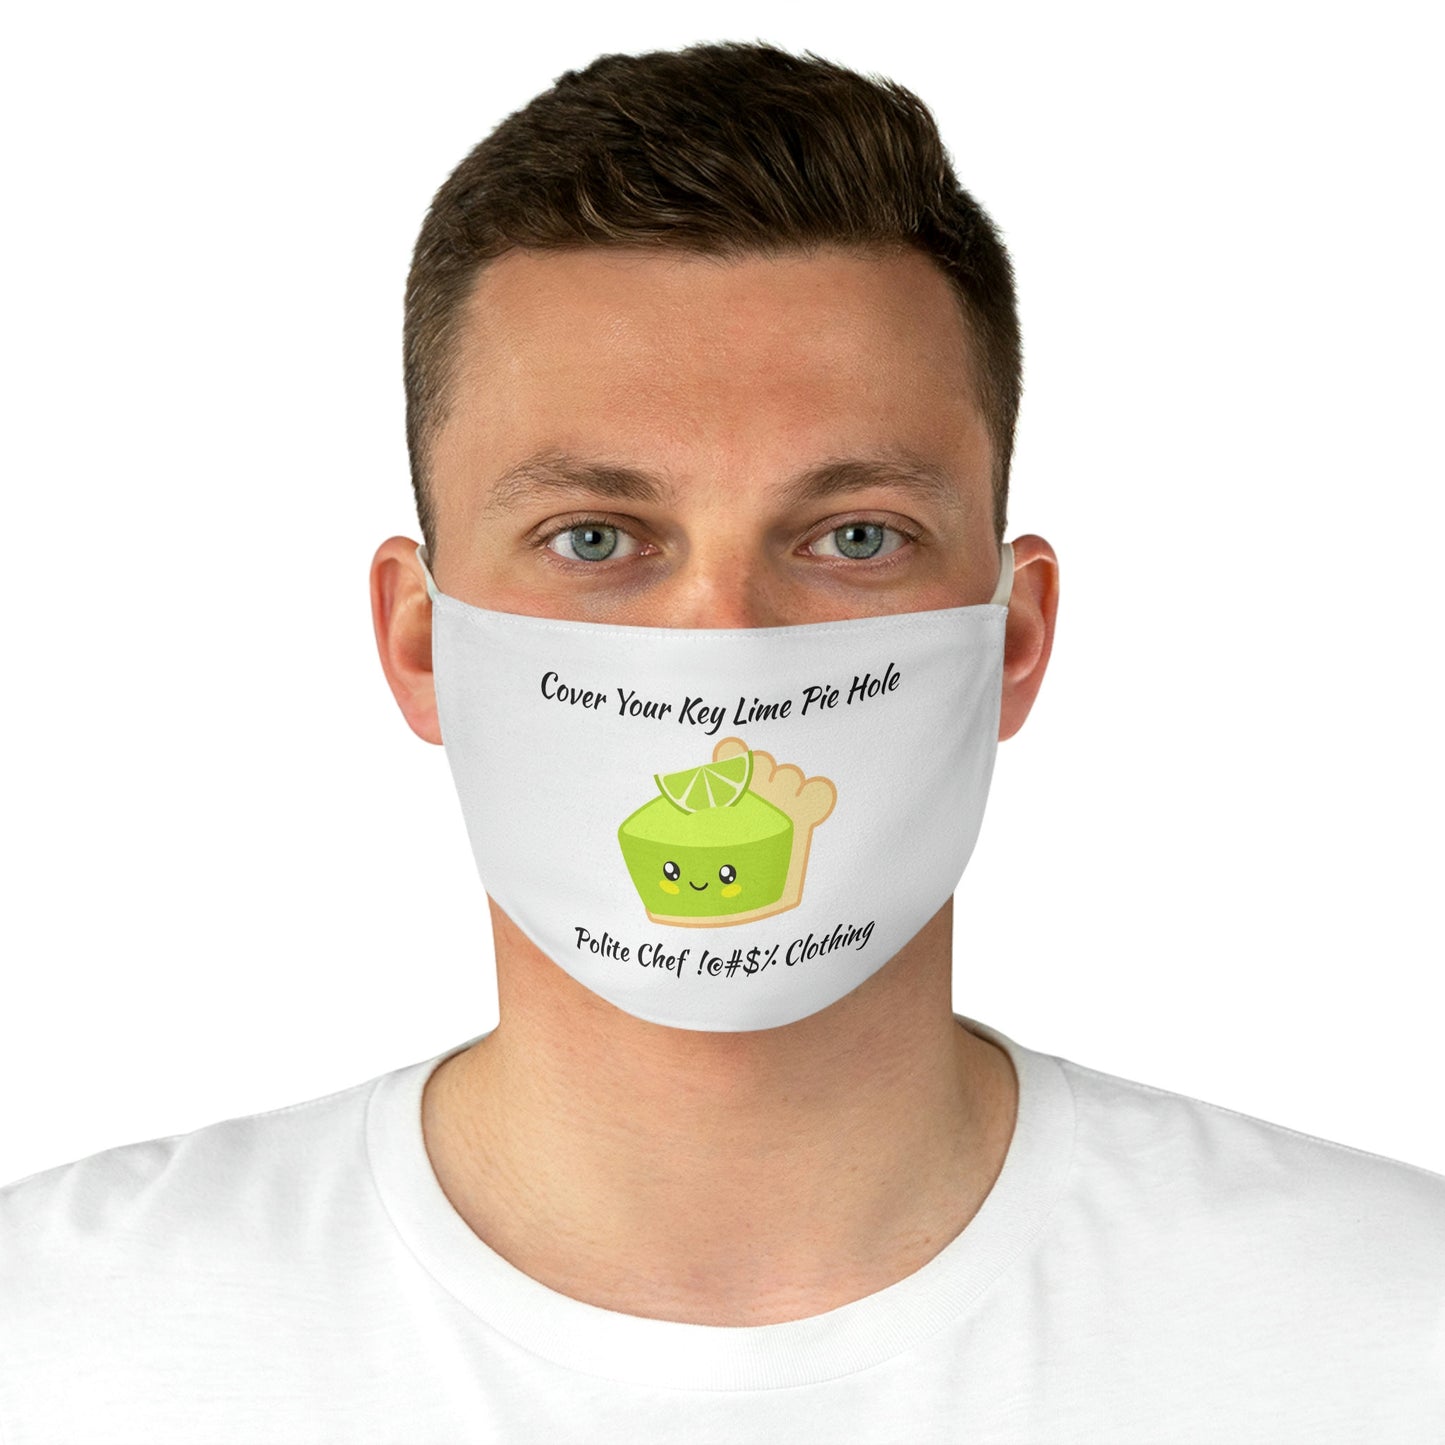 Key Lime Pie Hole Face Mask